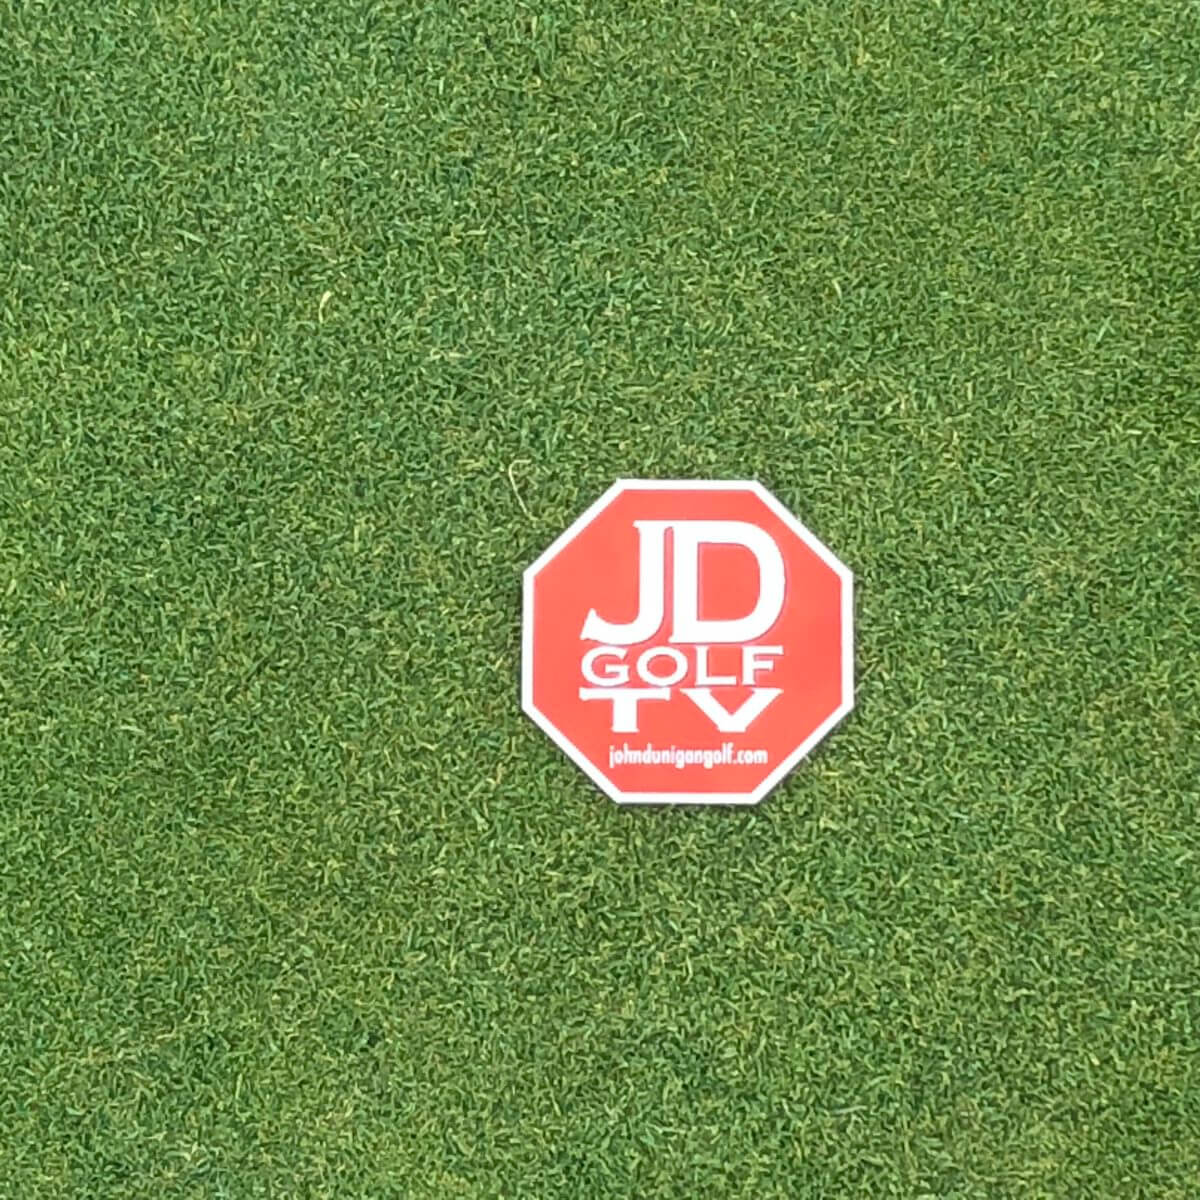 JD Golf TV Stop Signs (3)